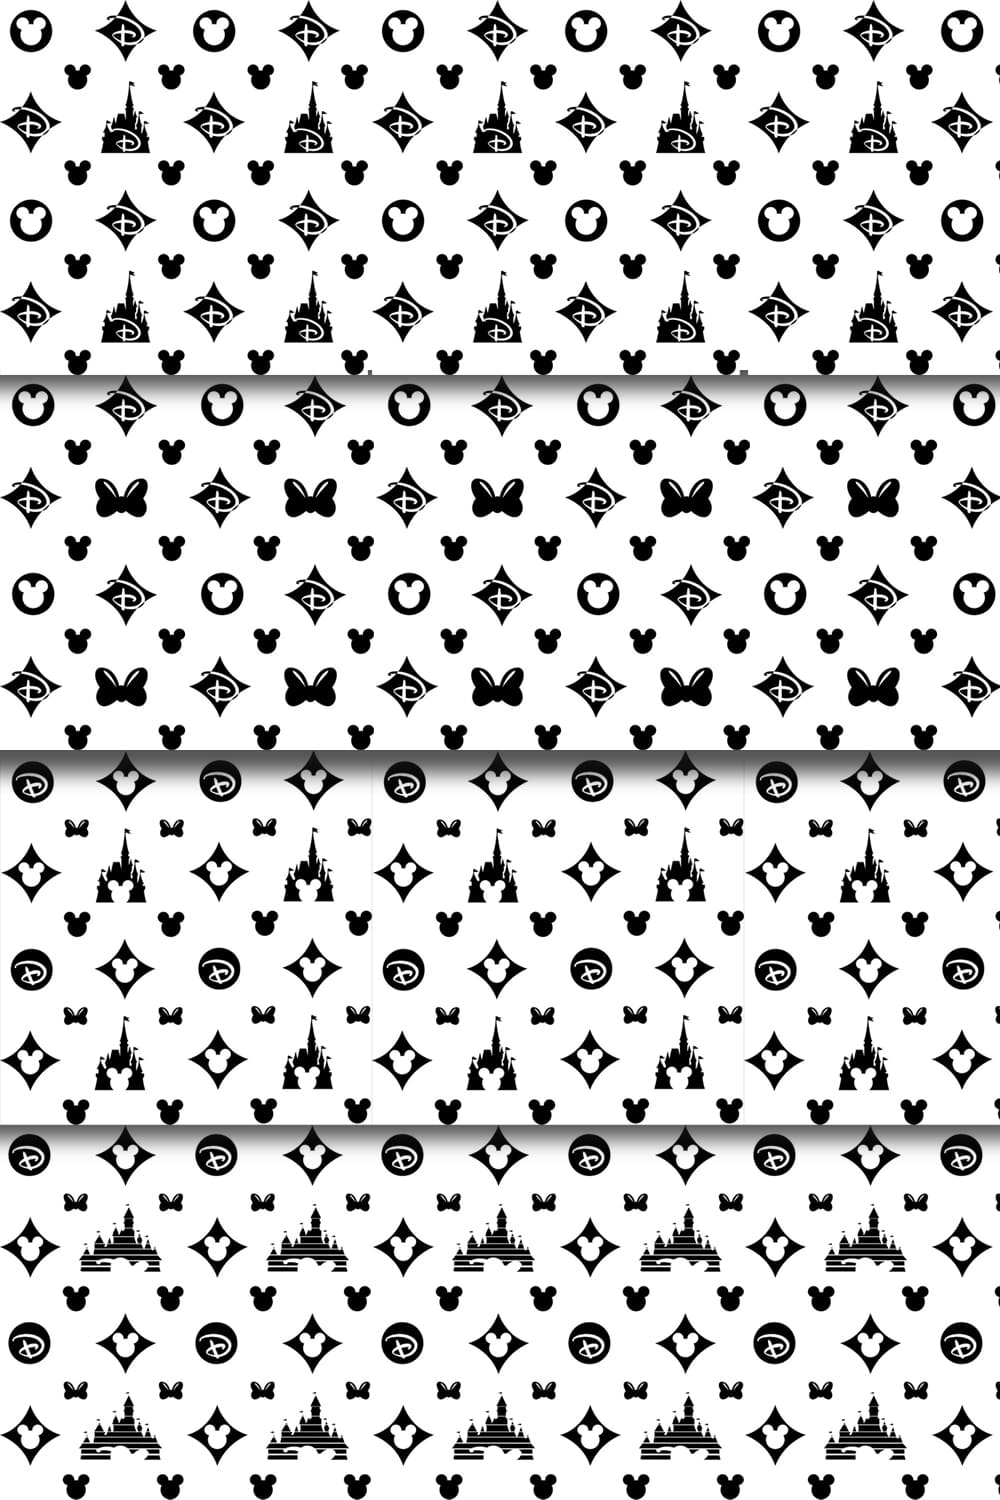 Louis Vuitton Bundle Svg with layered checkered pattern and seamless Luxury  brand logo - Origin SVG Art